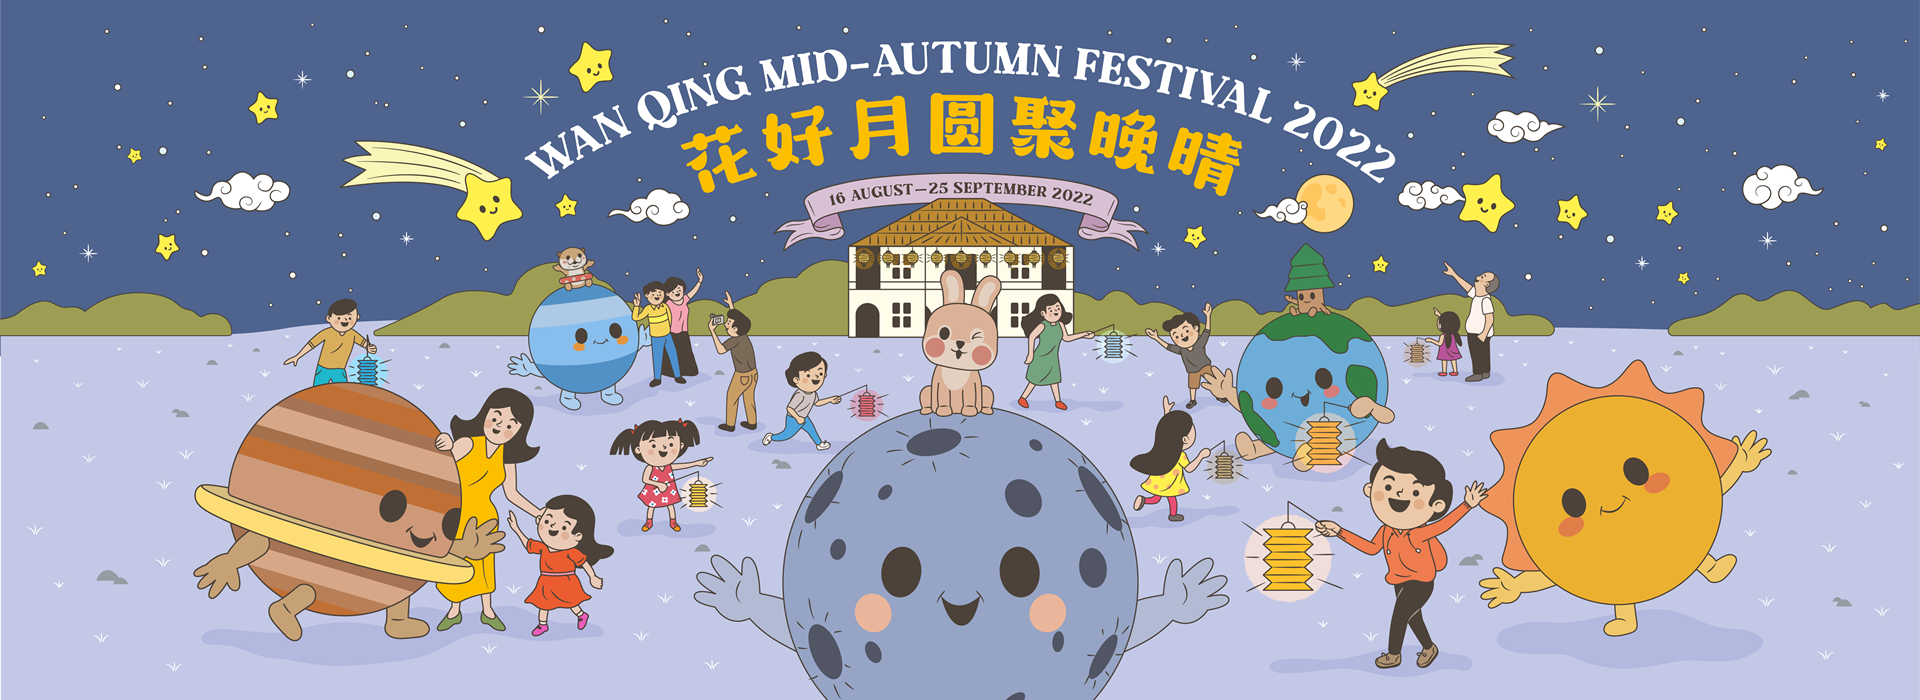 Wan Qing Mid-Autumn Festival 2022